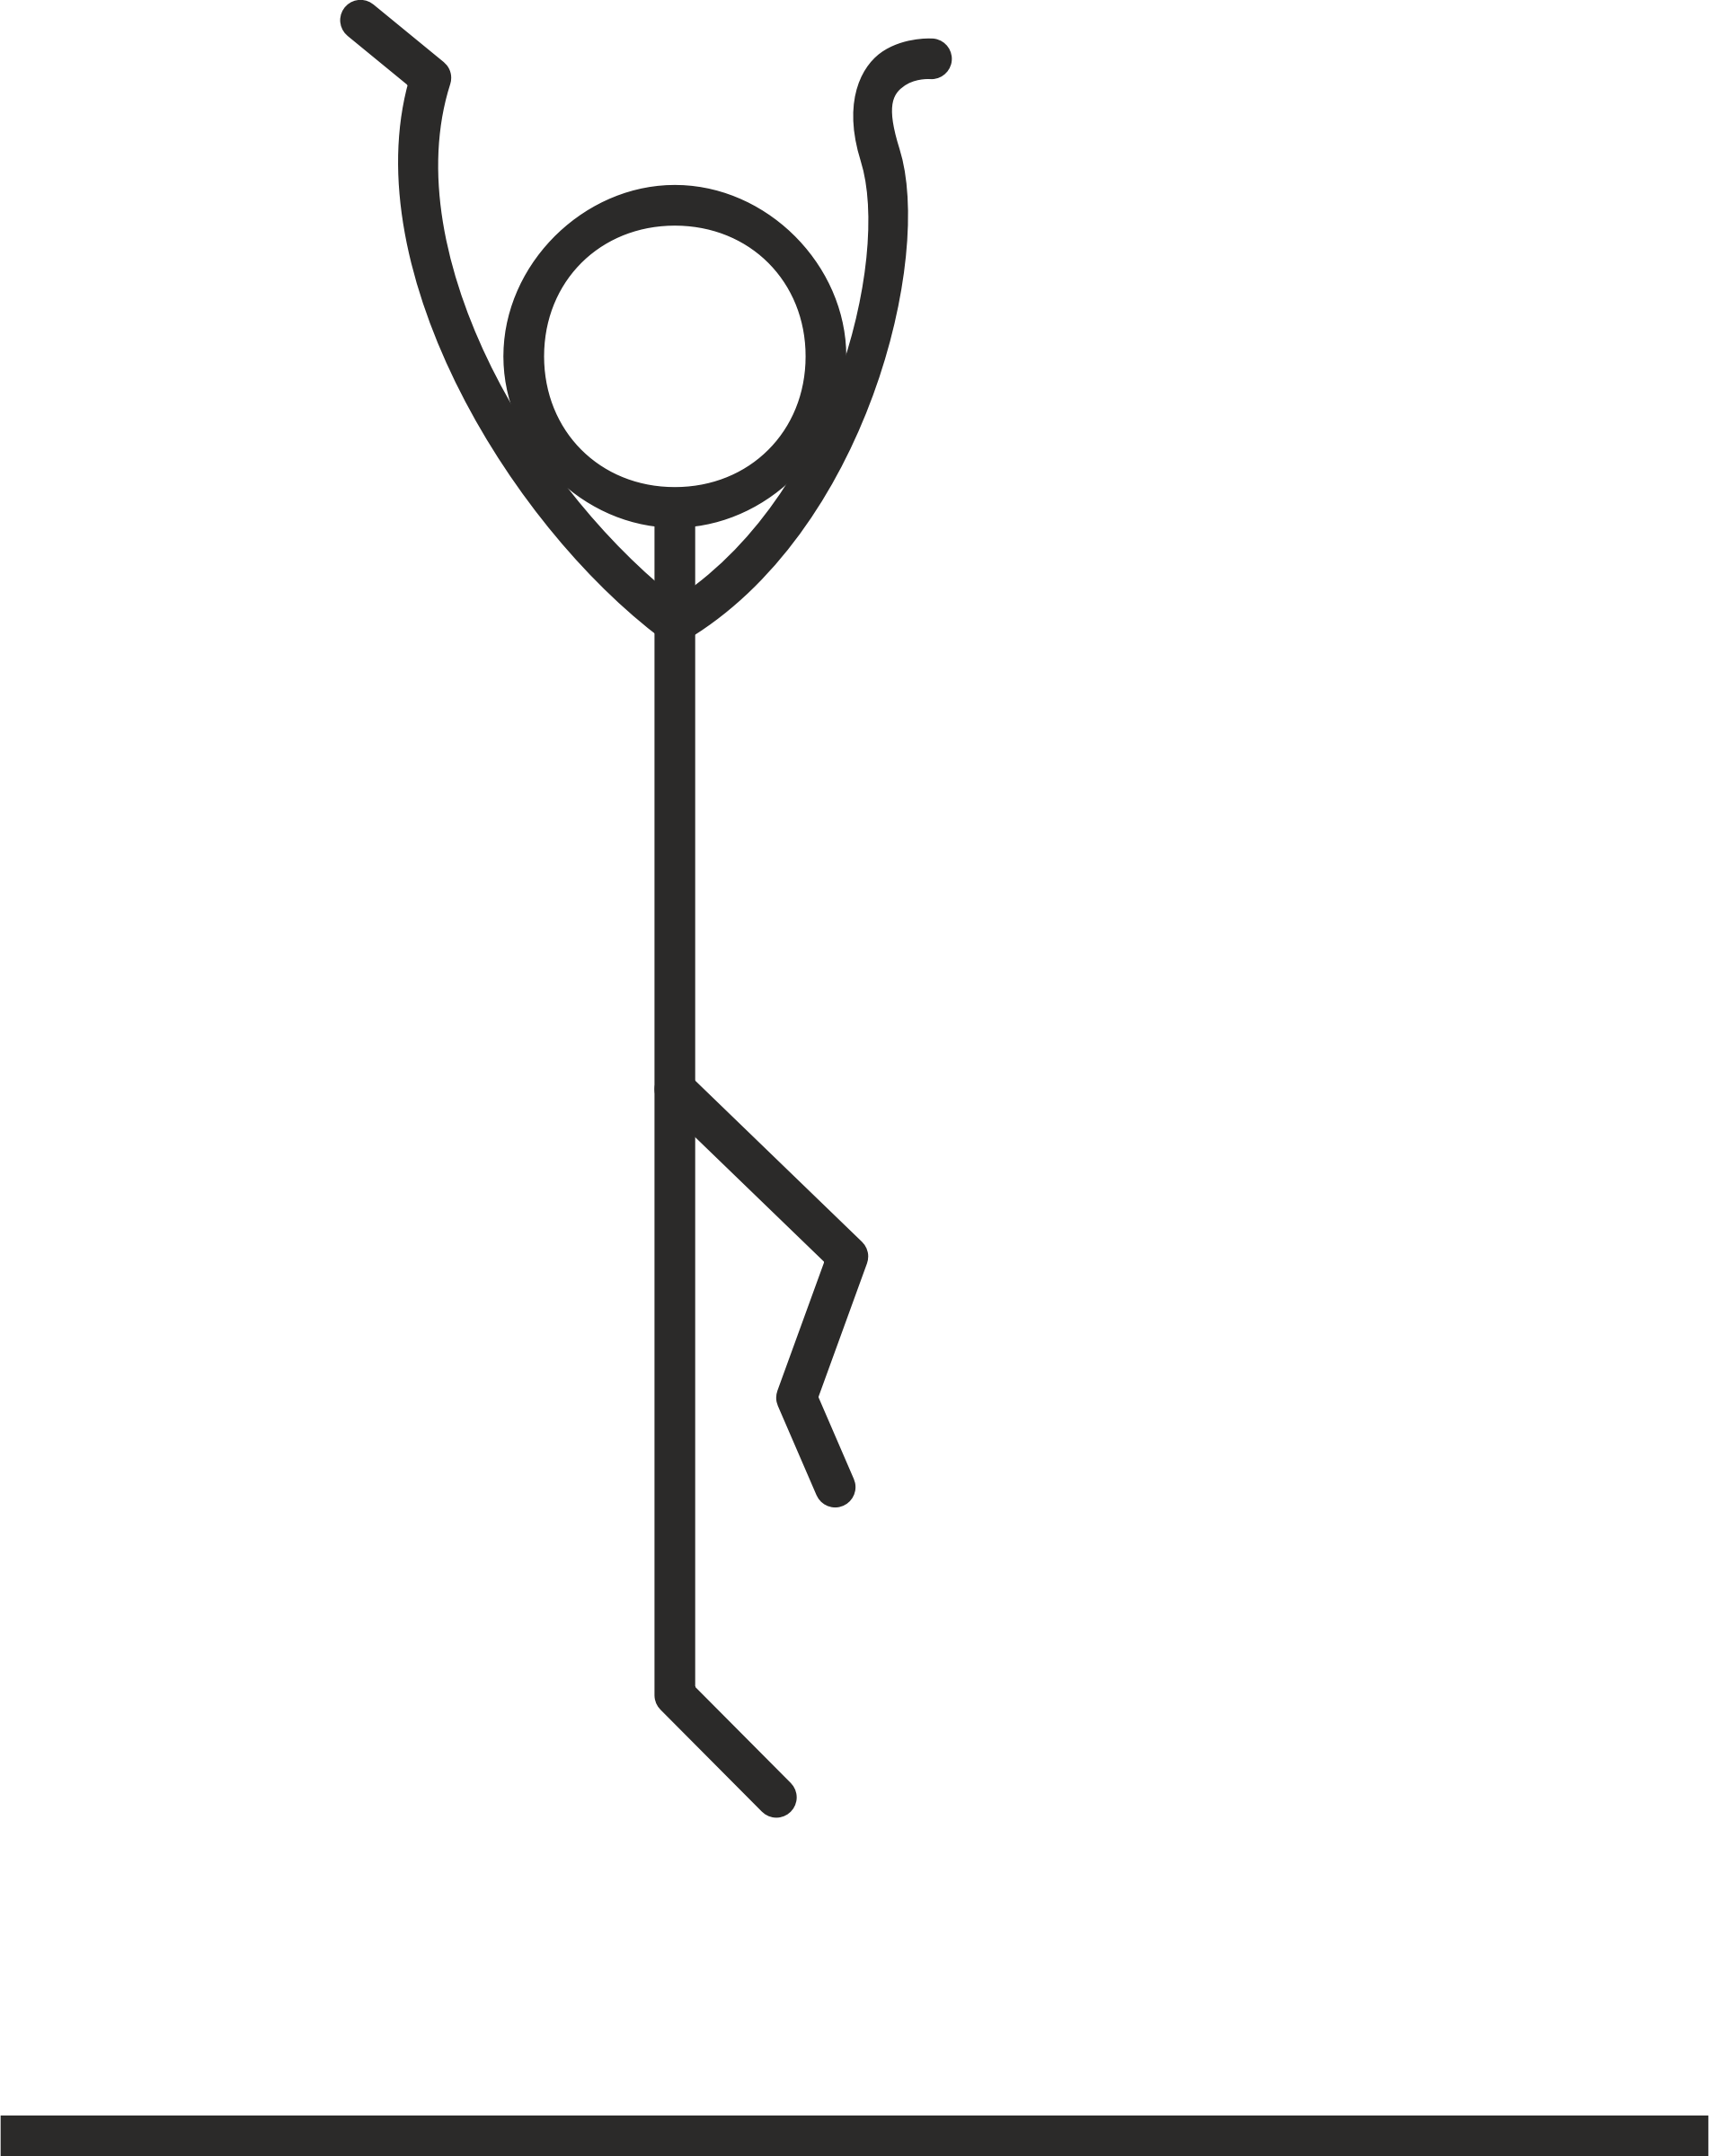 Stick figure jumping SVG Clip arts